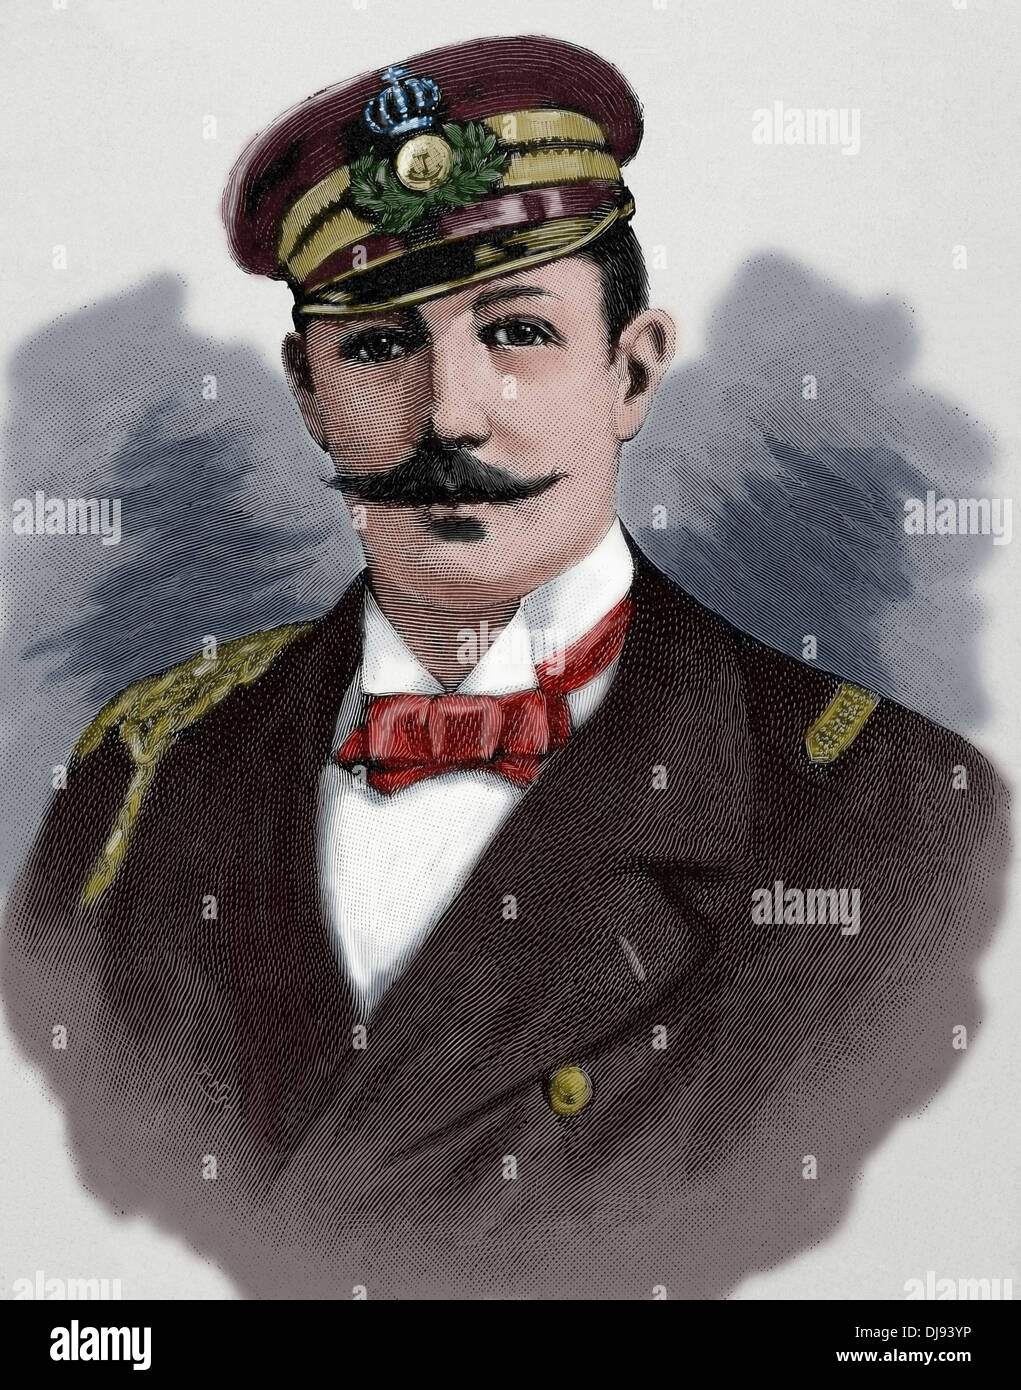 George I (1845-1913). King of Greece from 1863-1913. House of Schleswig-Holstein-Sonderburg-Glücksburg. Colored engraving. Stock Photo